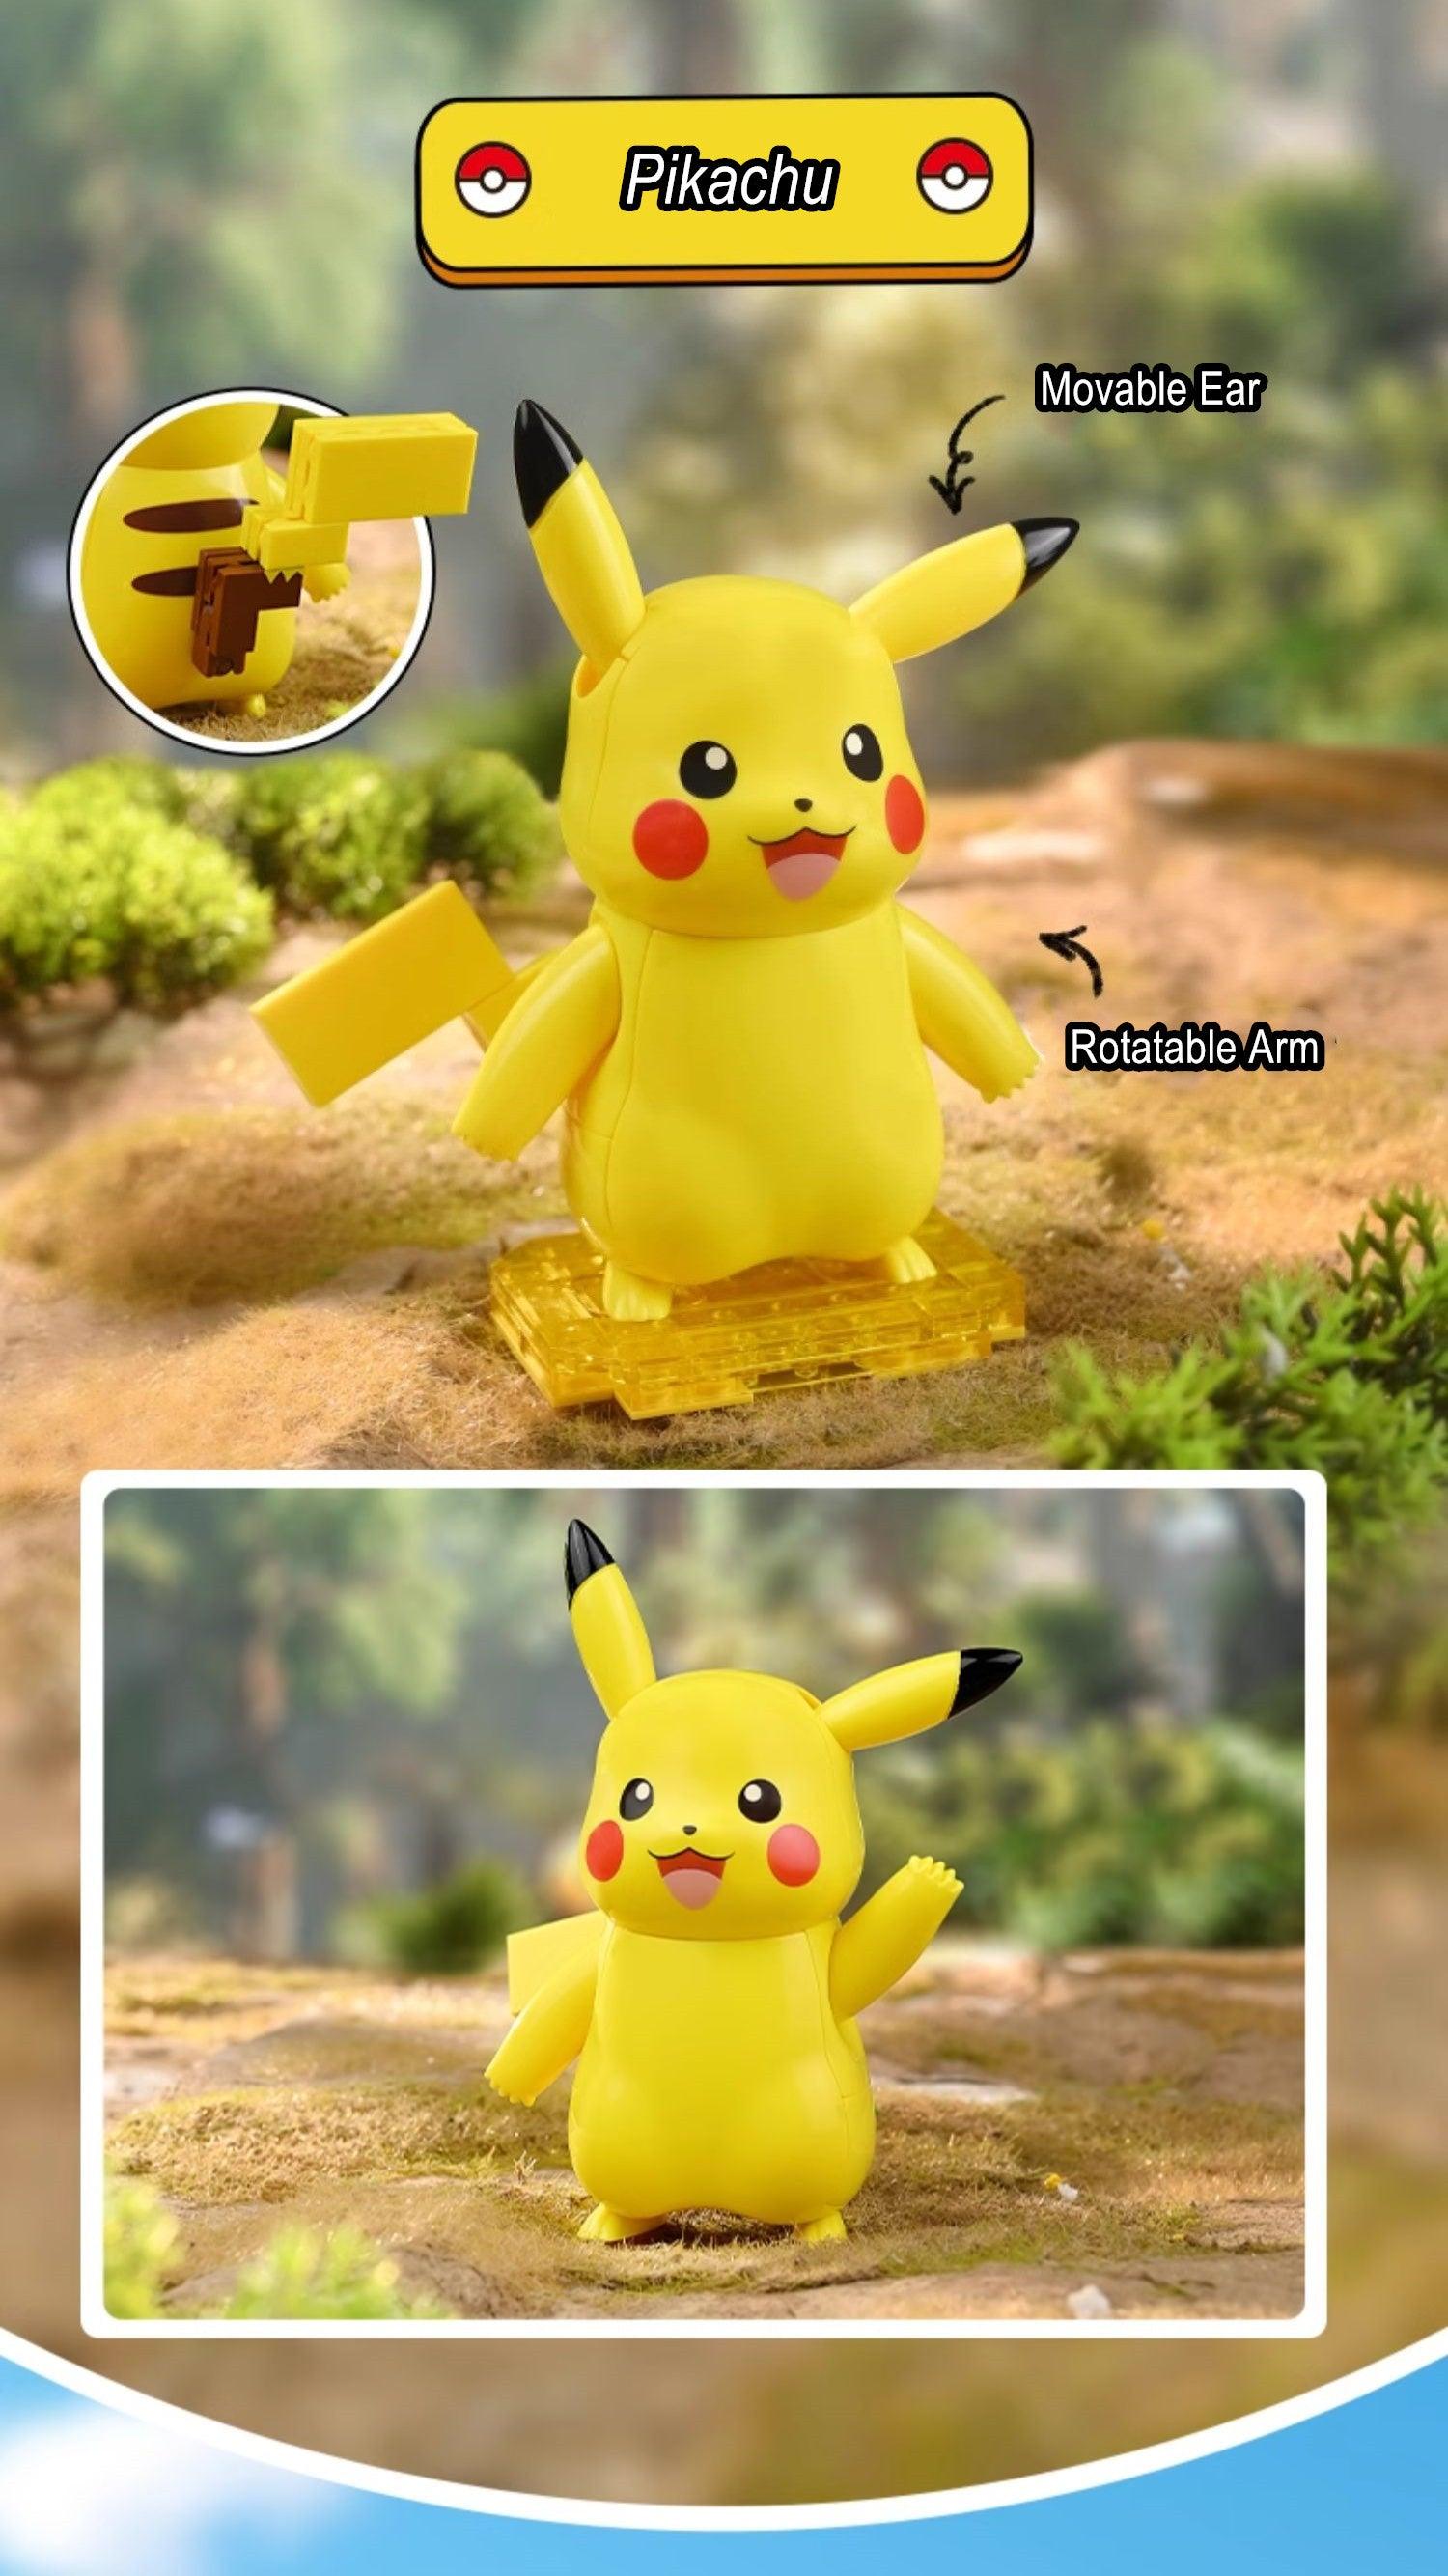 Keeppley - Pokemon Pikachu Minifigure Building Blocks Set